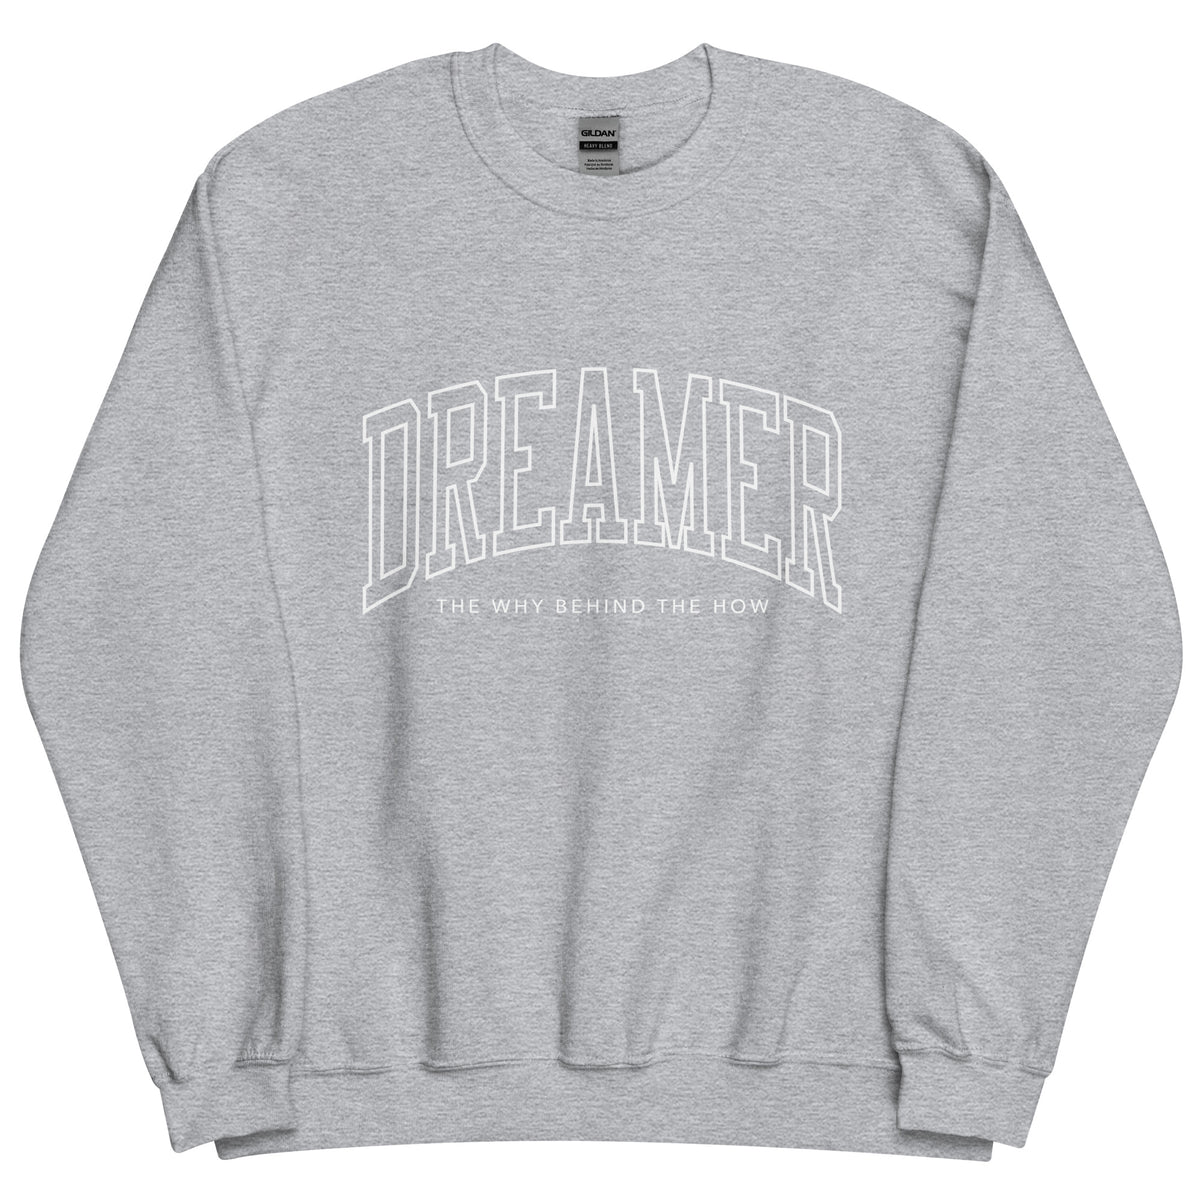 Dreamer Crewneck